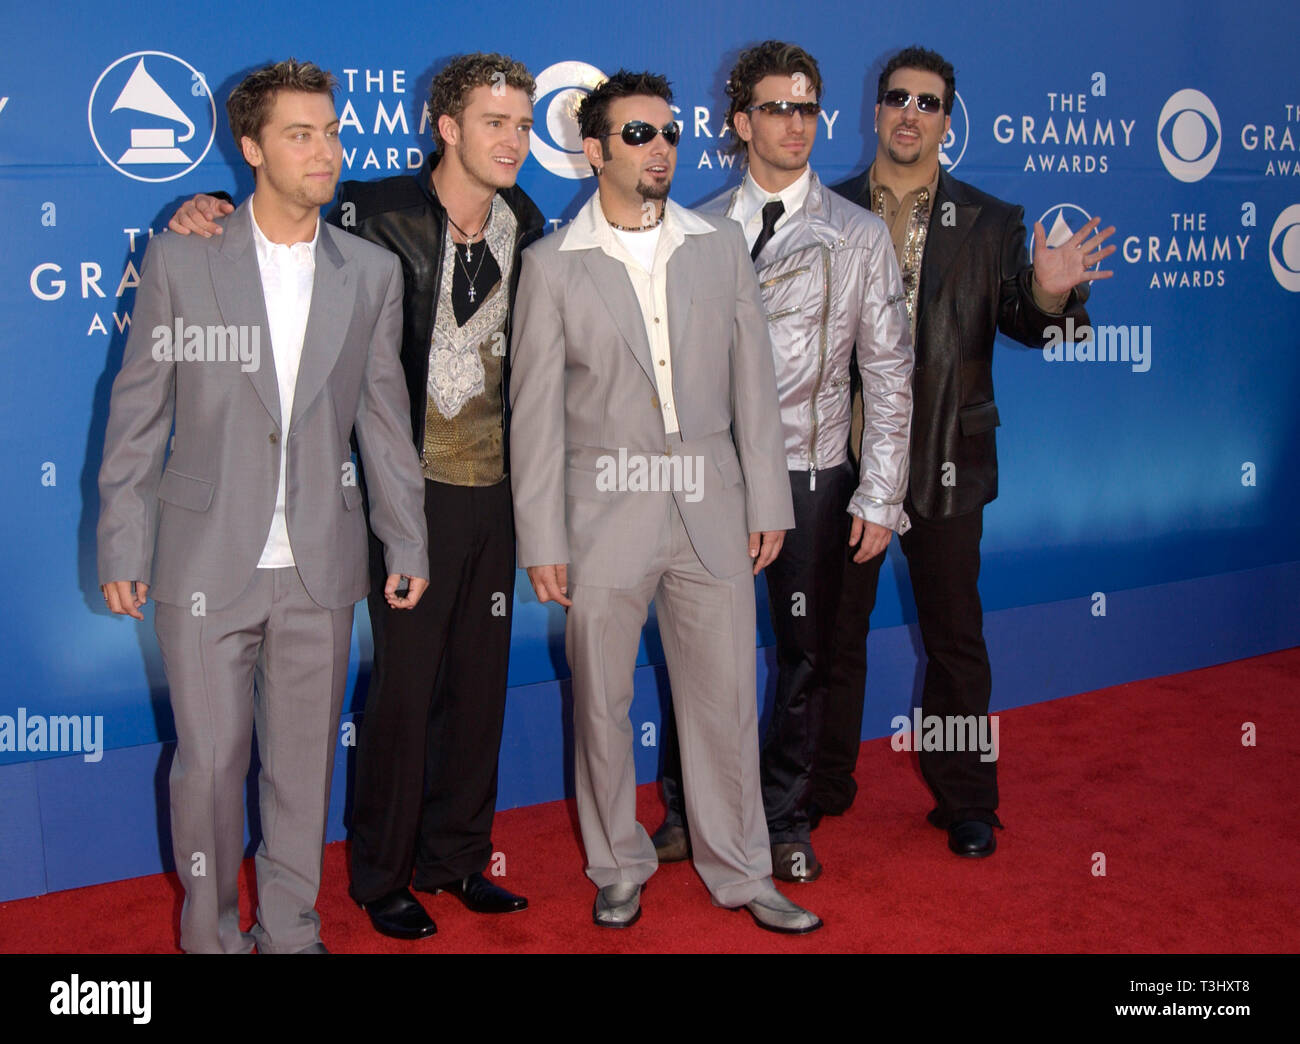 LOS ANGELES, Ca. Februar 27, 2002: Pop Gruppe *NSYNC bei den Grammy Awards 2002 in Los Angeles. Stockfoto